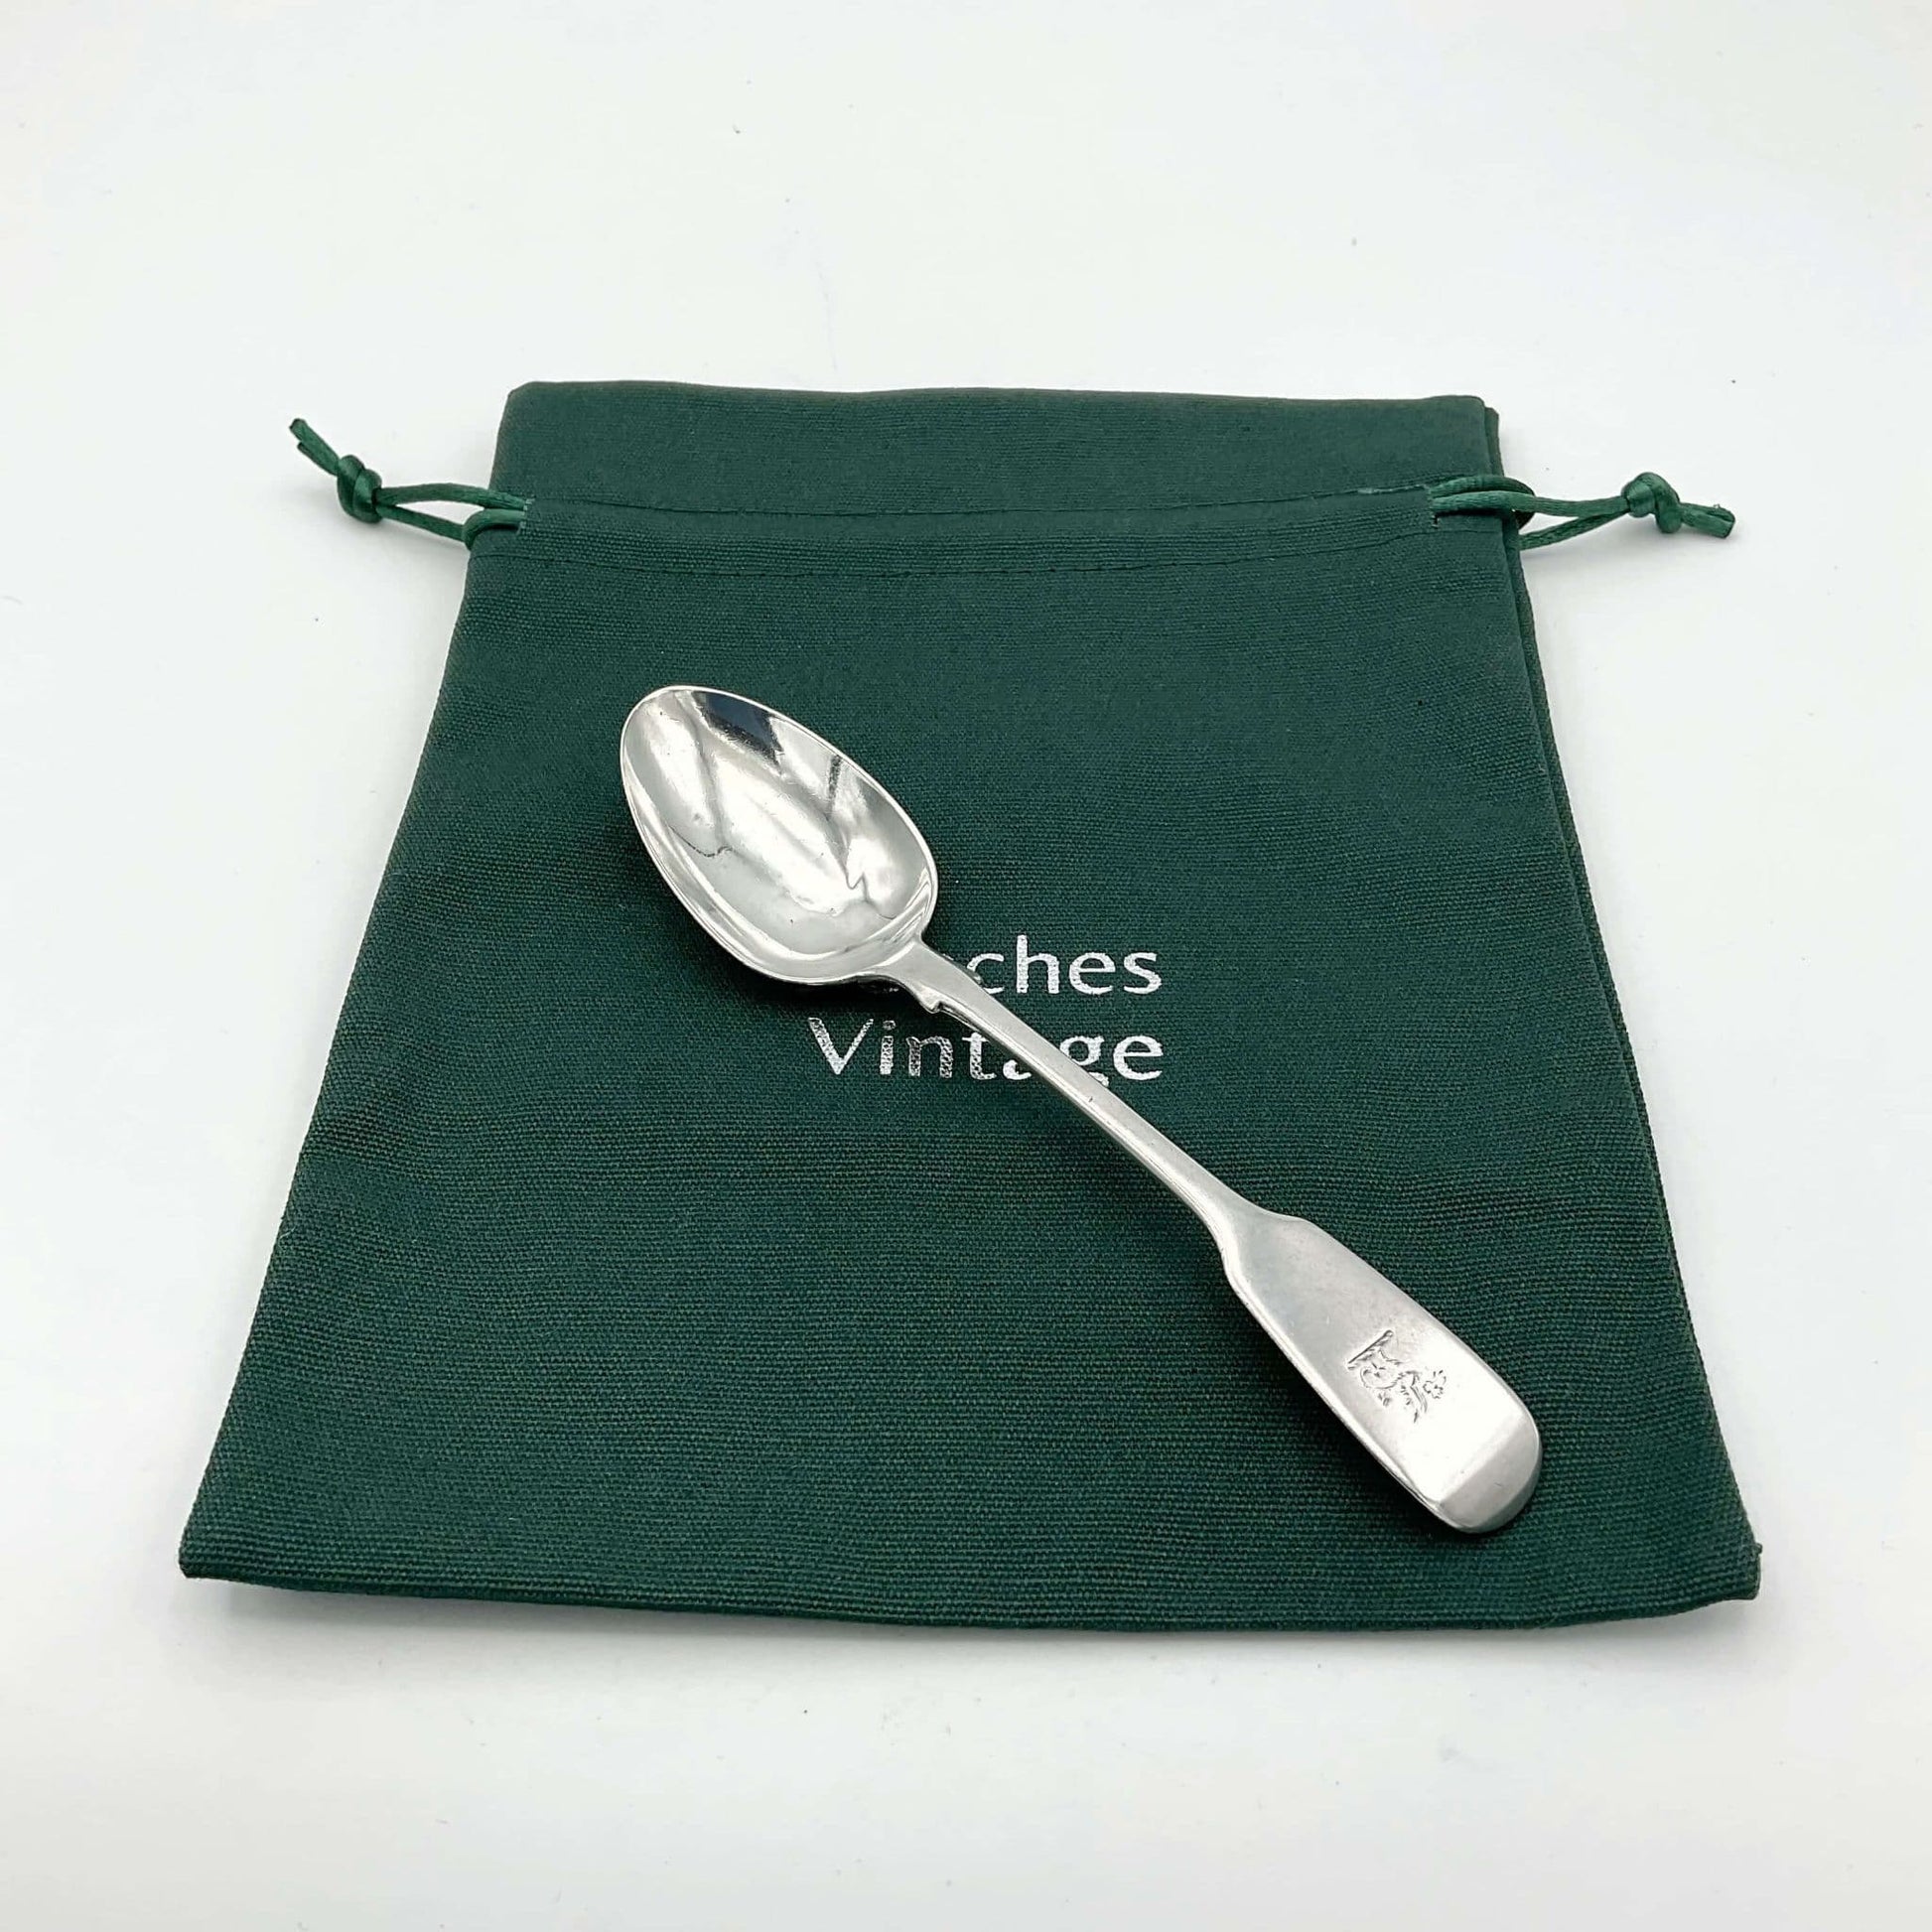 Antique silver teaspoon on a green cotton gift bag